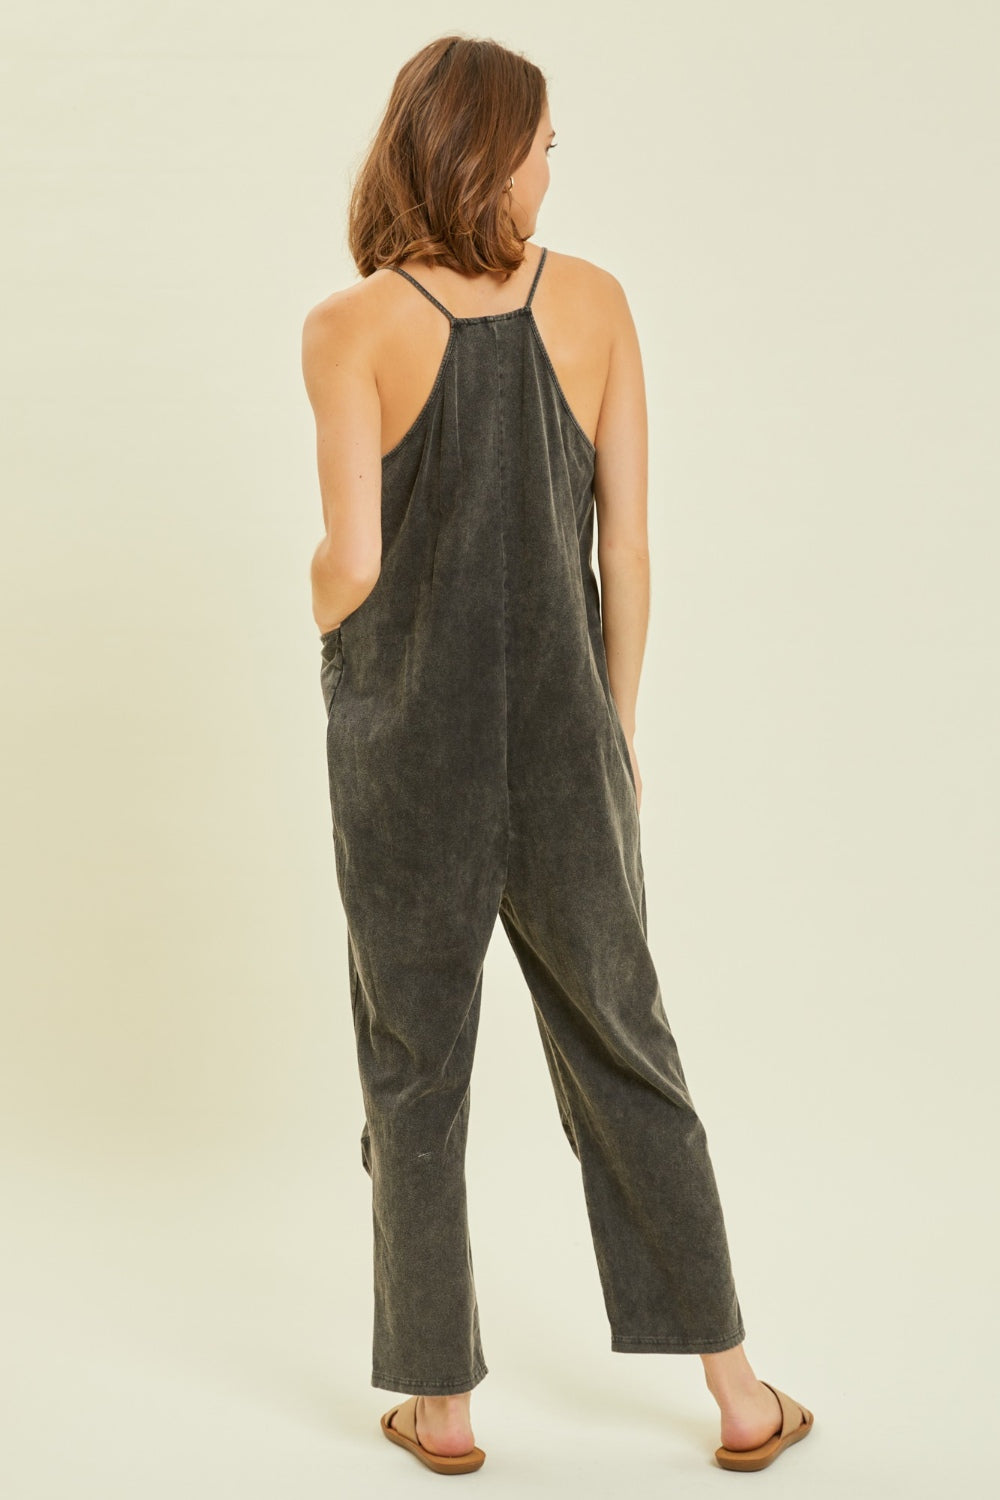 TEEK - Black Mineral-Washed Oversized Pocketed Jumpsuit JUMPSUIT TEEK Trend   